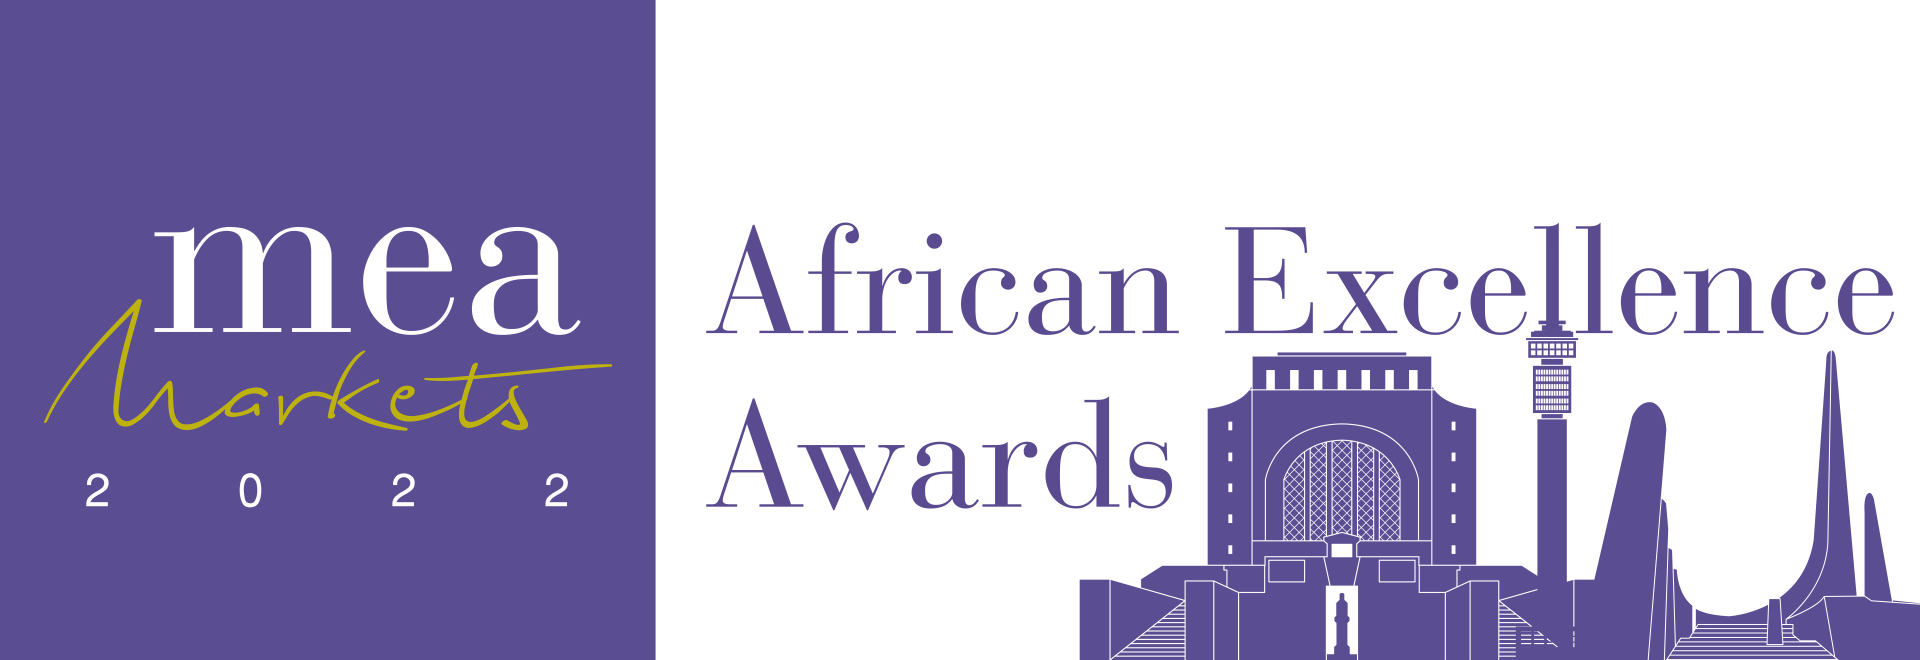 MEA Markets Magazine kondig die wenners van die 2022 African Excellence Awards aan - MEA Markets